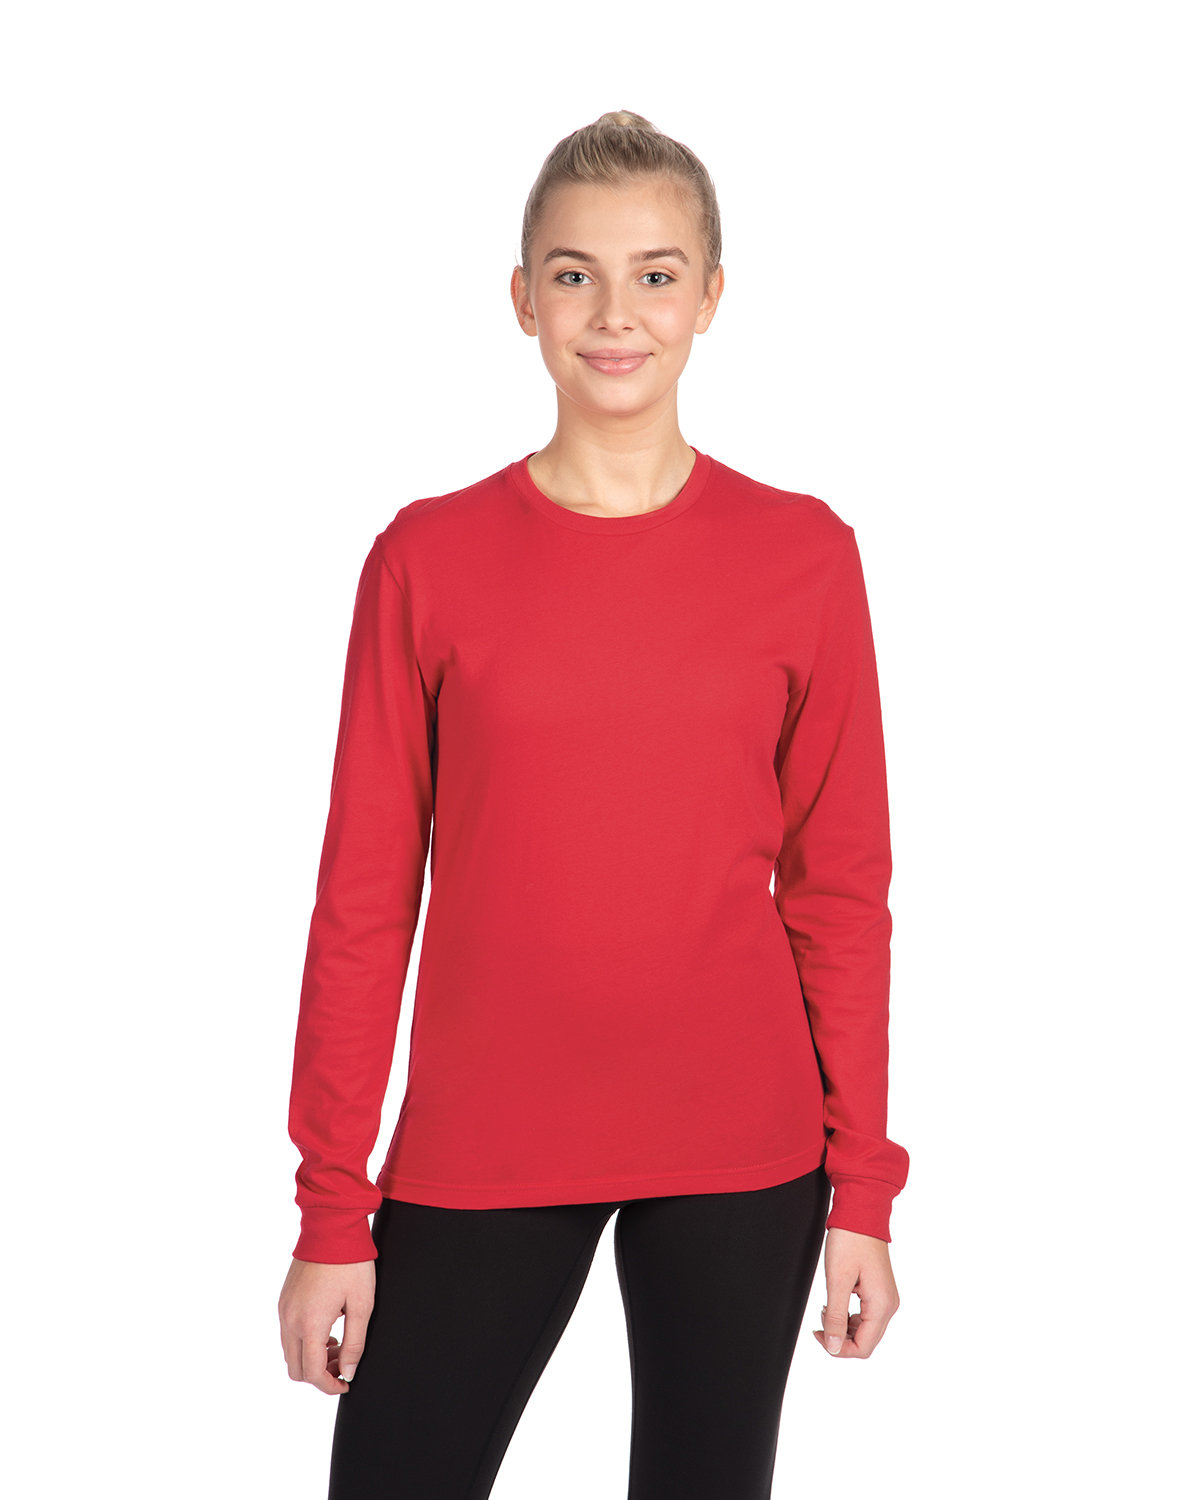 Next Level Apparel Unisex CVC Long-Sleeve T-Shirt RED 